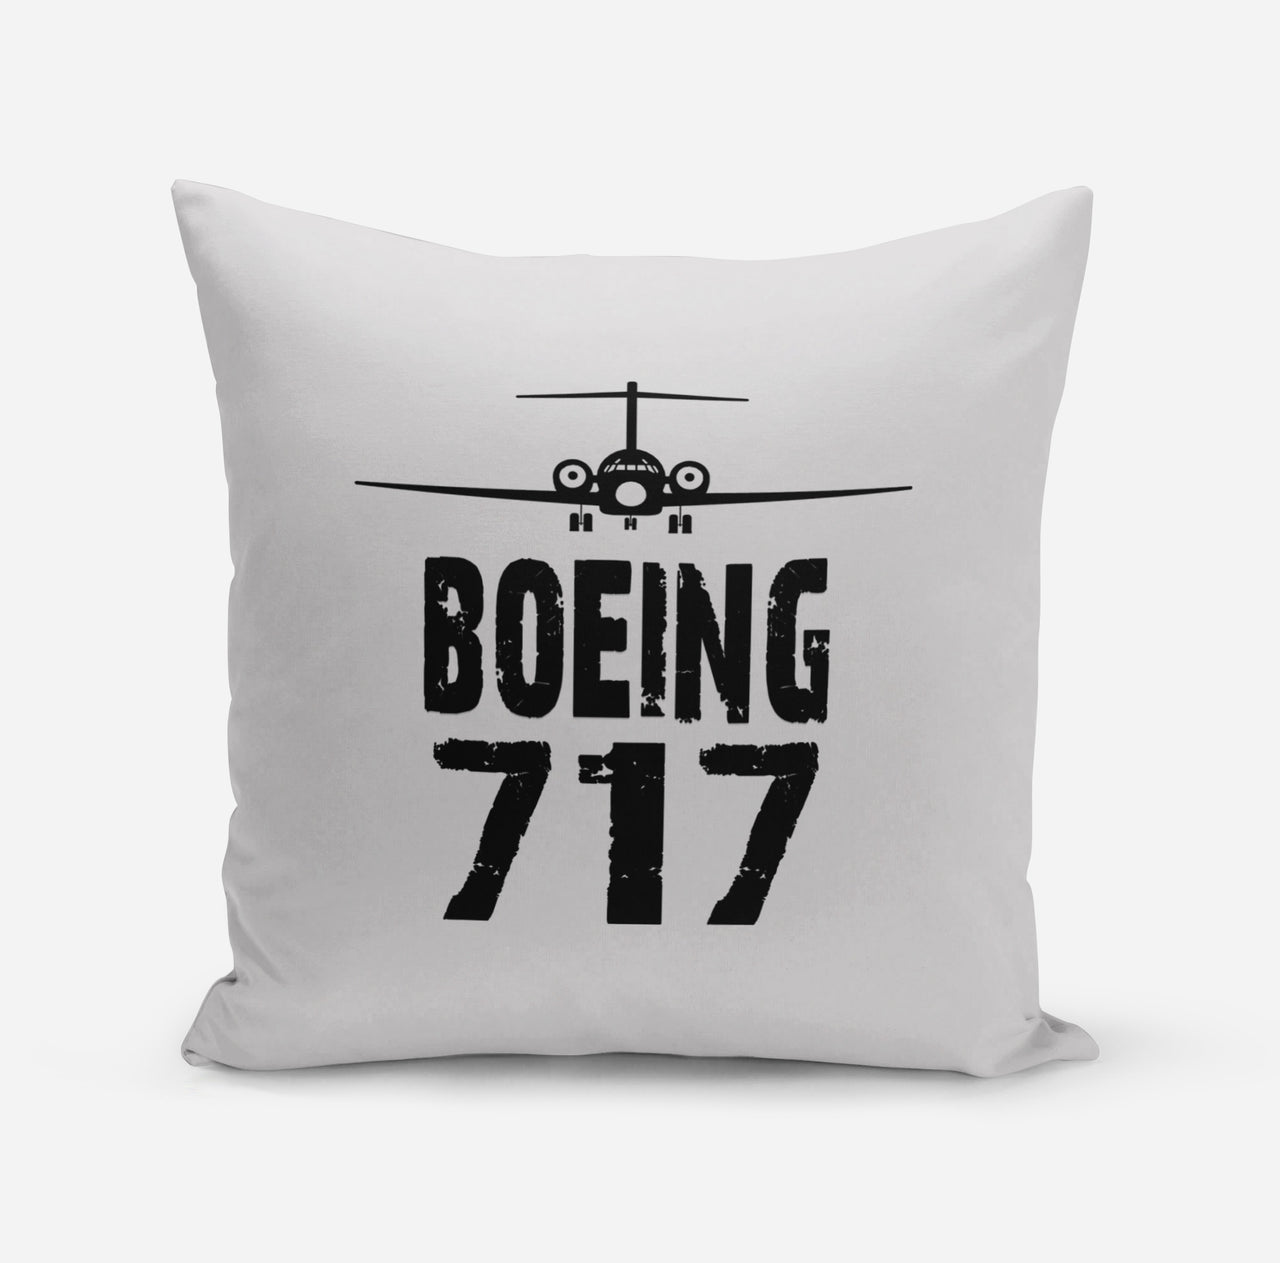 Boeing 717 & Plane Designed Pillows